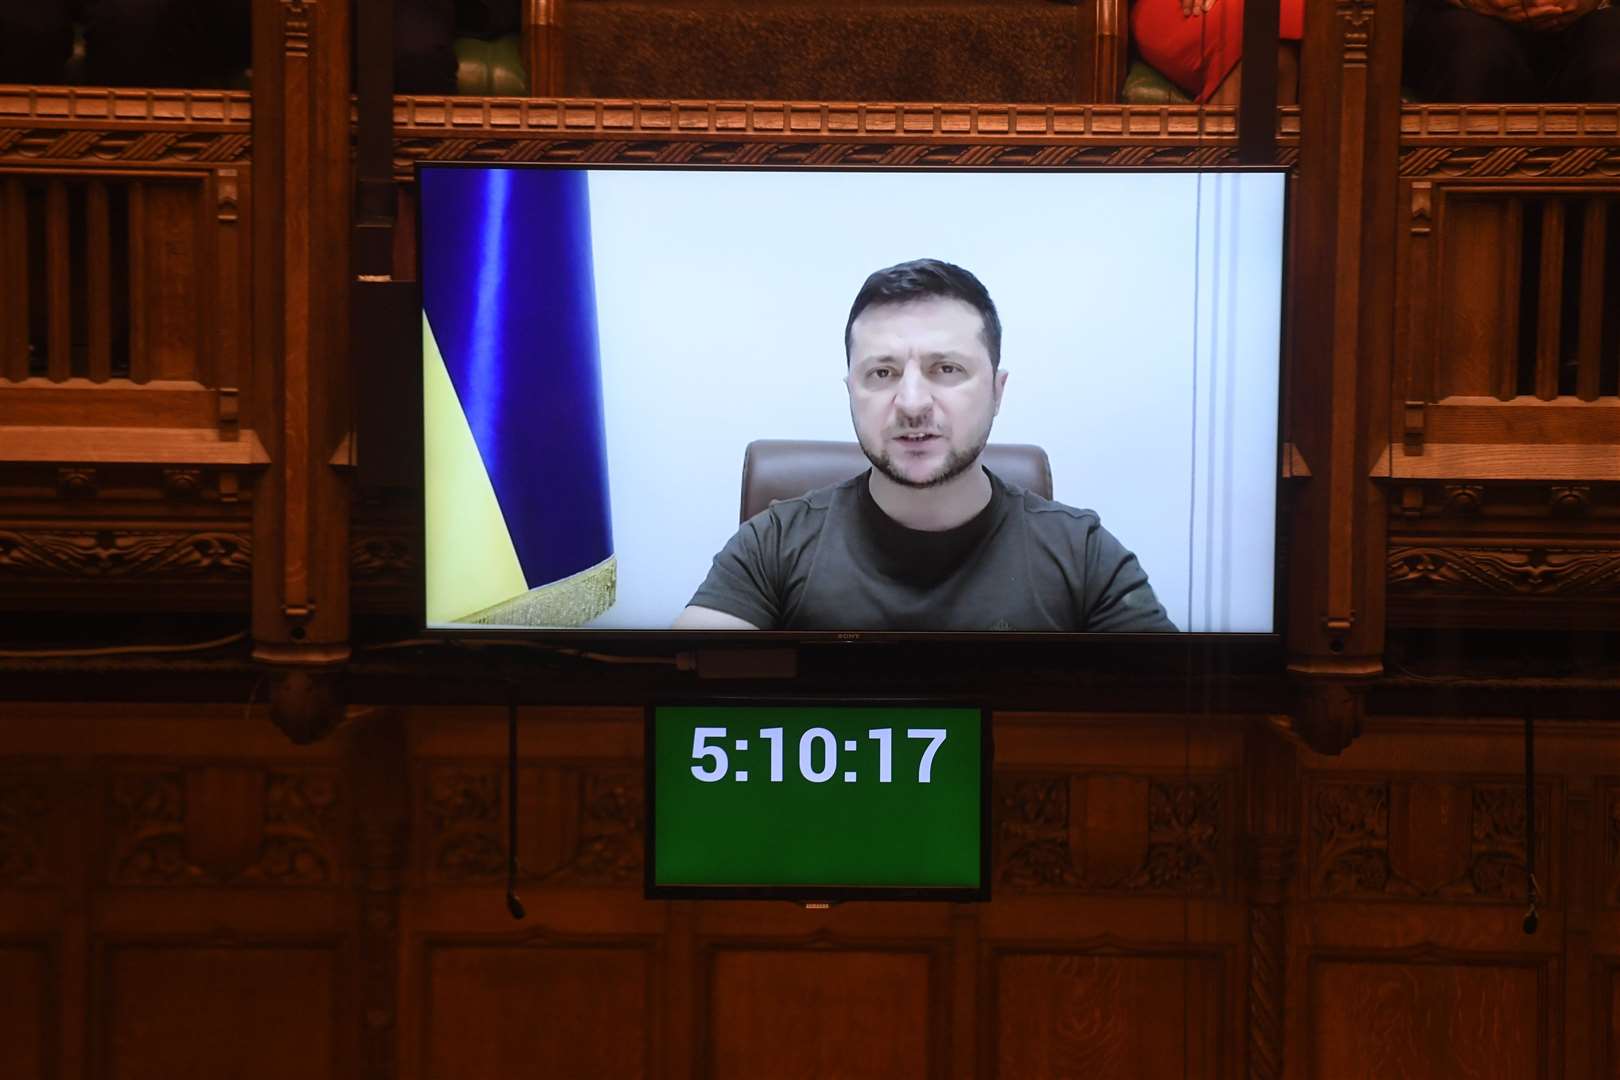 Ukraine President Volodymyr Zelensky address to MPs in House of Commons